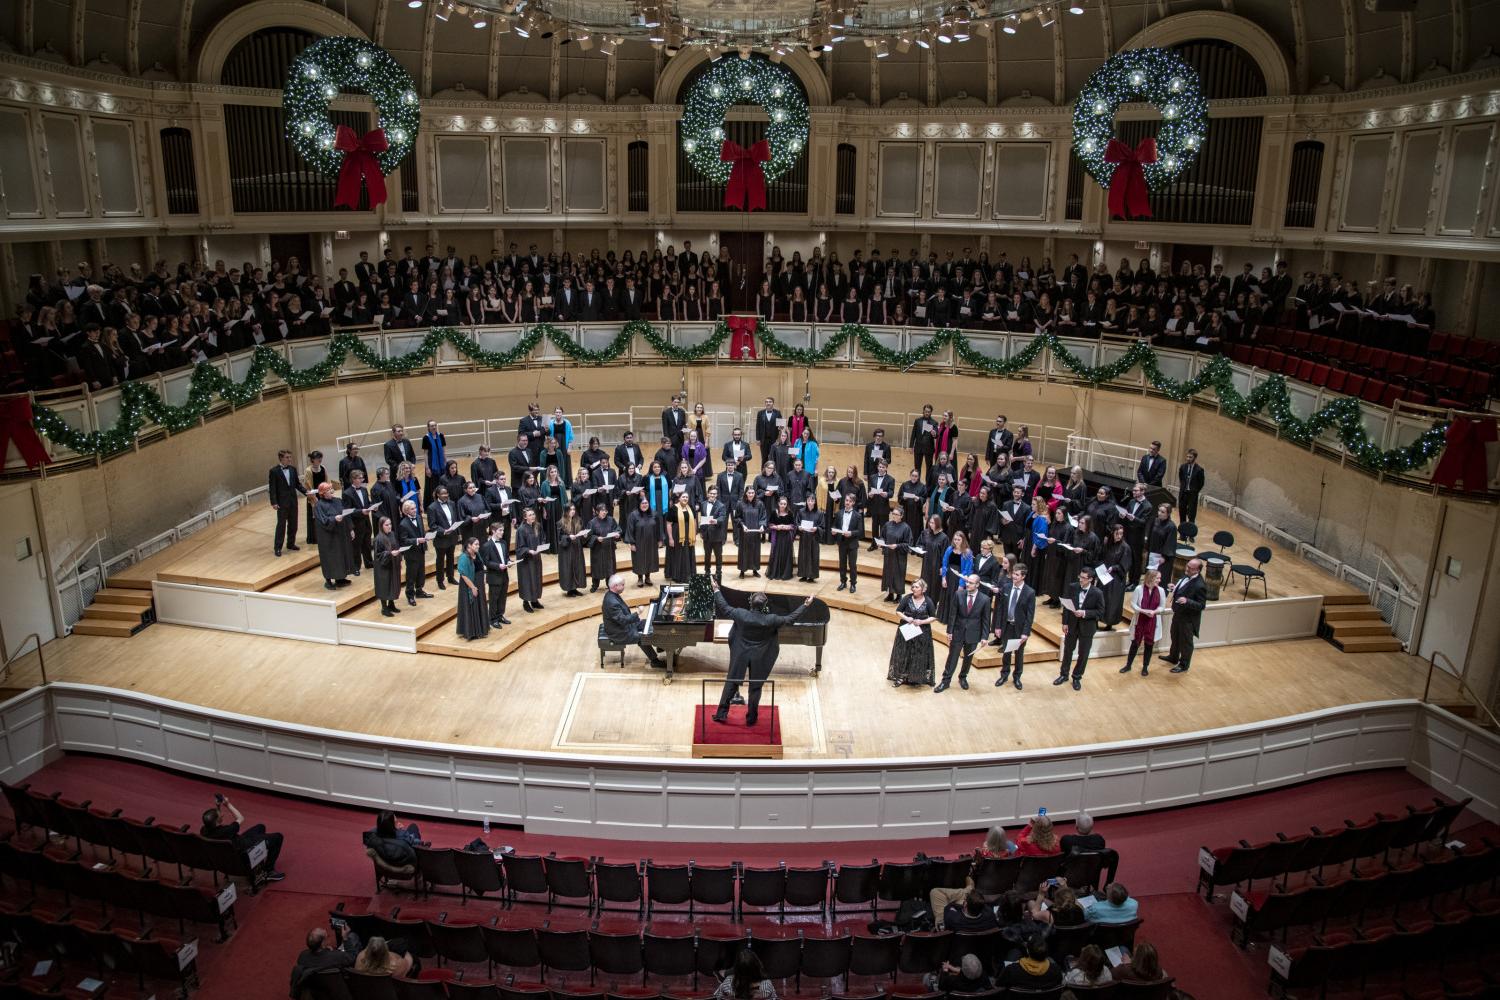 The <a href='http://dvf.nbshgold.com'>全球十大赌钱排行app</a> Choir performs in the Chicago Symphony Hall.